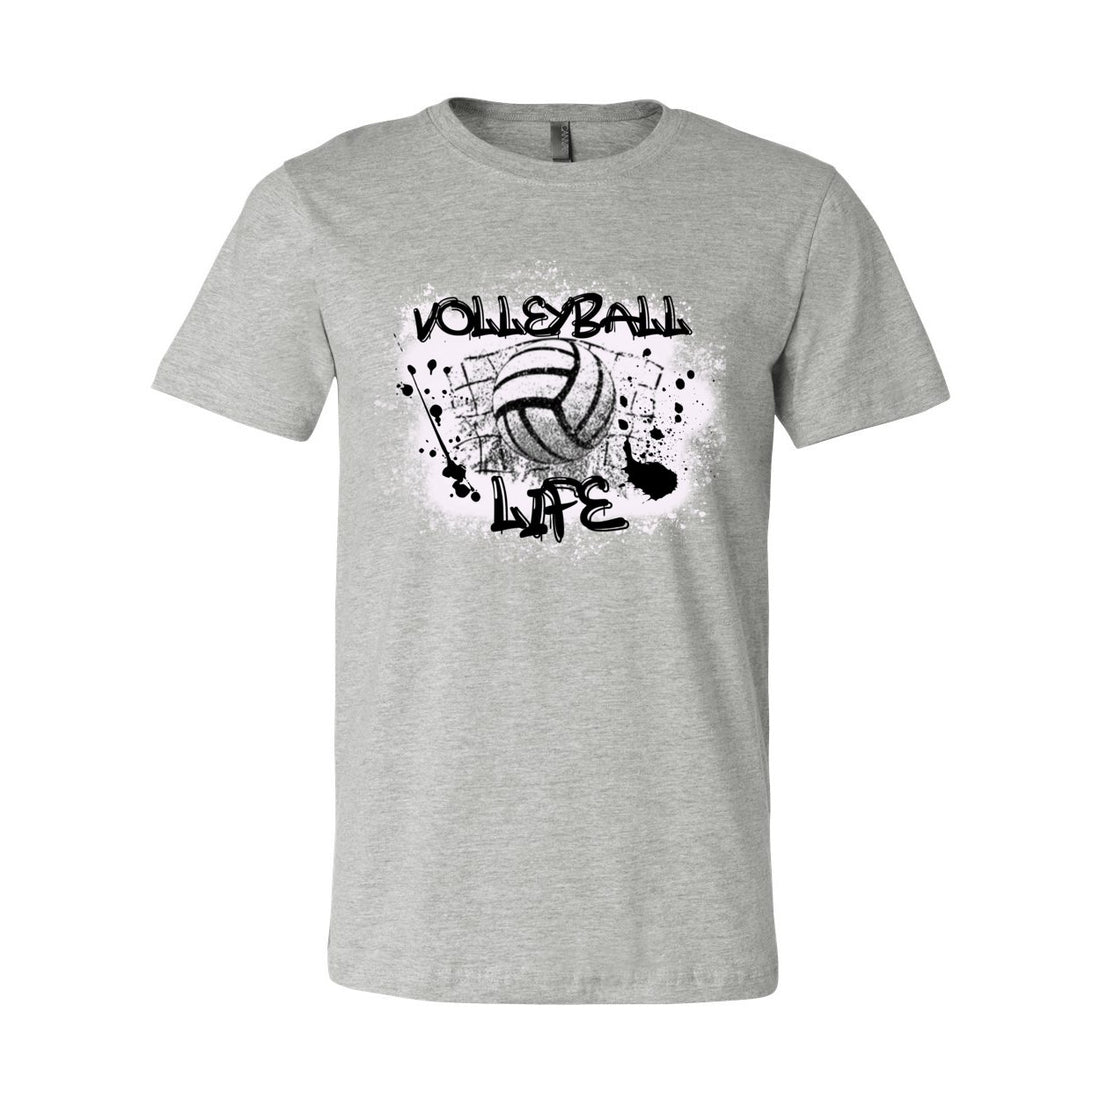 Volleyball Life Short Sleeve Jersey Tee - T-Shirts - Positively Sassy - Volleyball Life Short Sleeve Jersey Tee